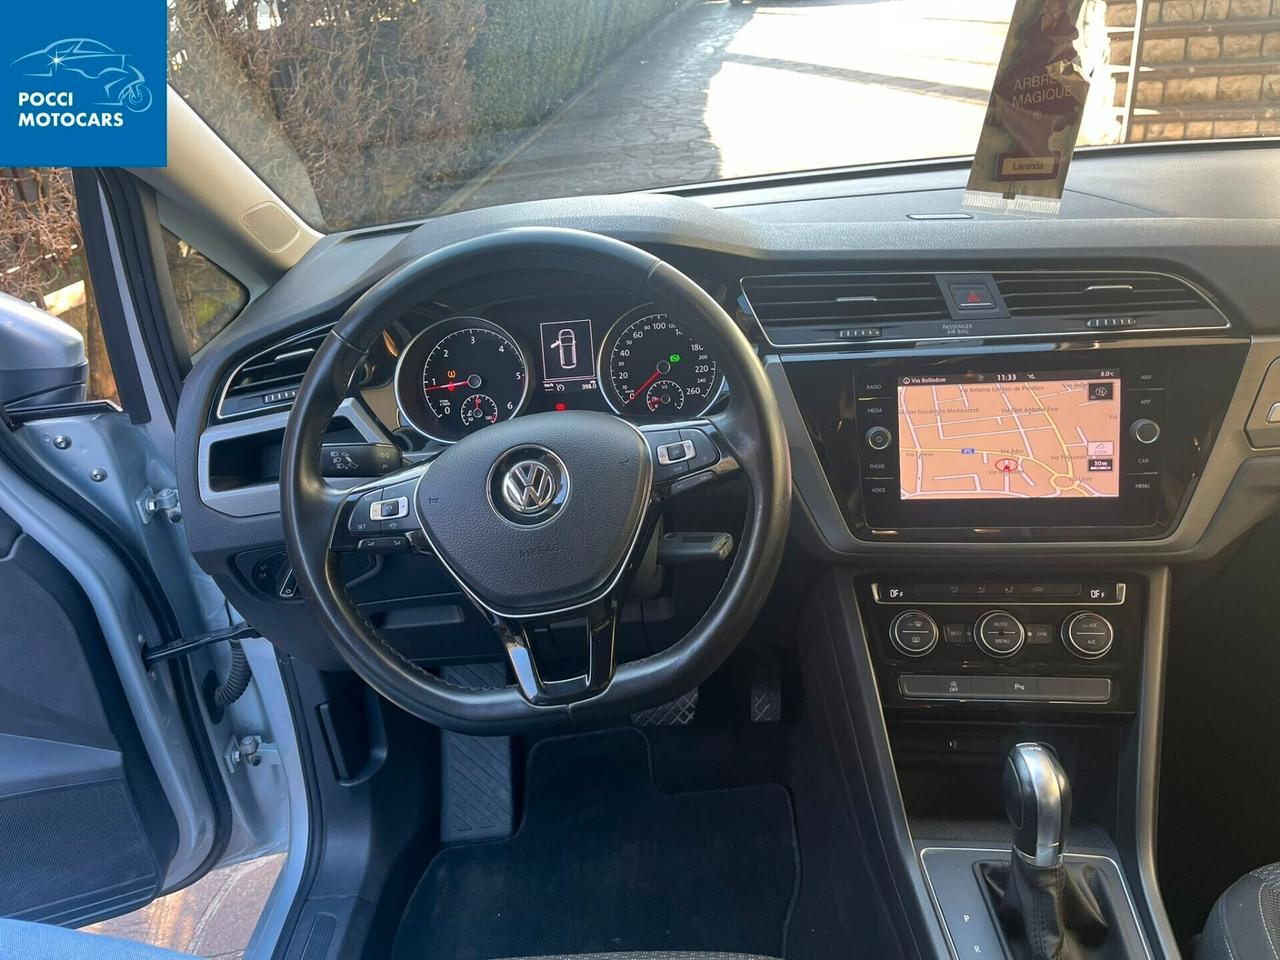 Volkswagen Touran 1.6 TDI 115 CV - 7 POSTI -